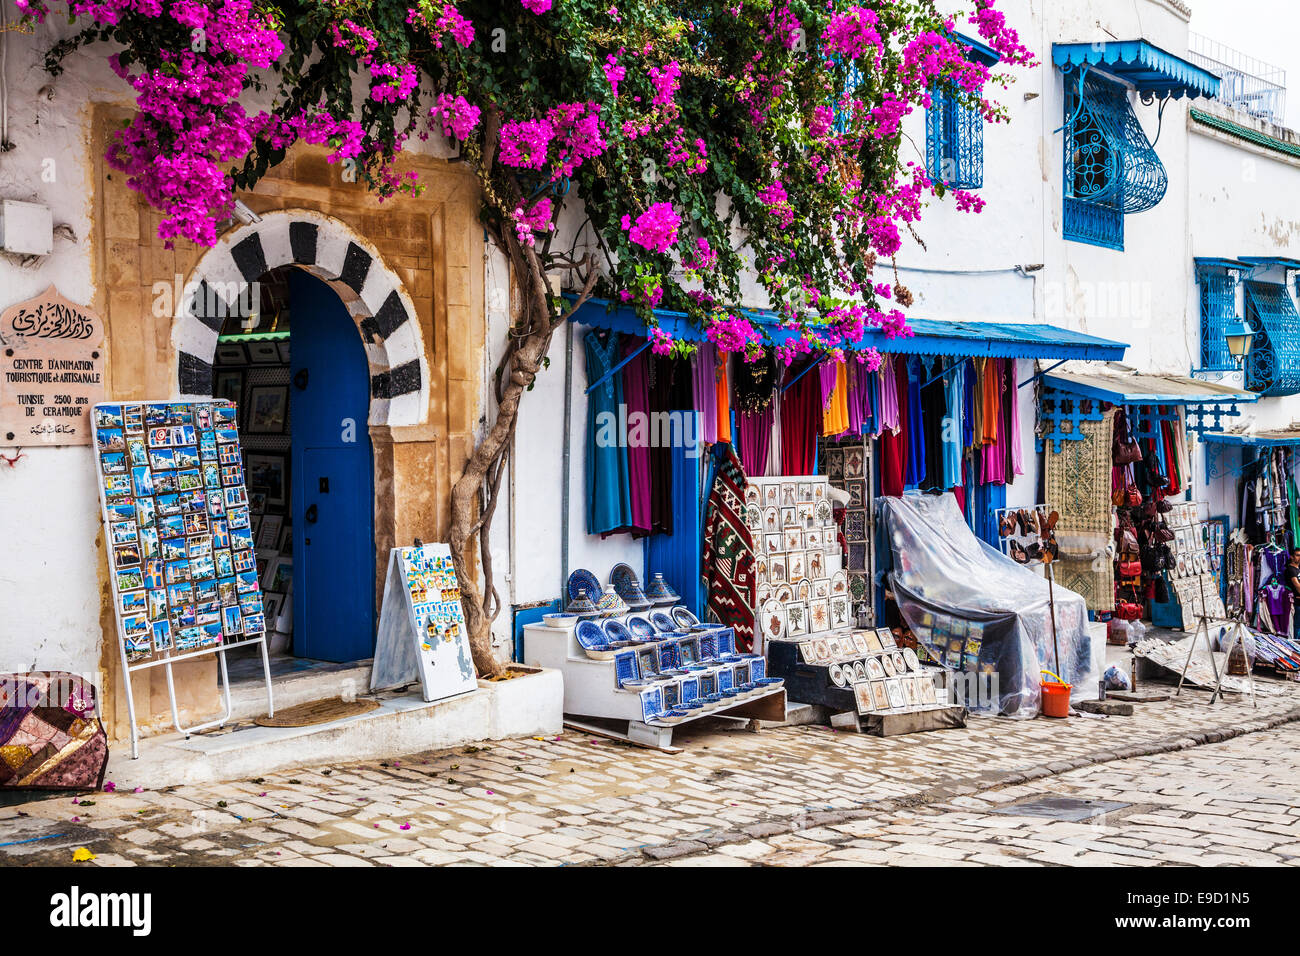 Traditional Tunisian souvenirs along the main street in Sidi Bou Said, Tunisia. Stock Photo